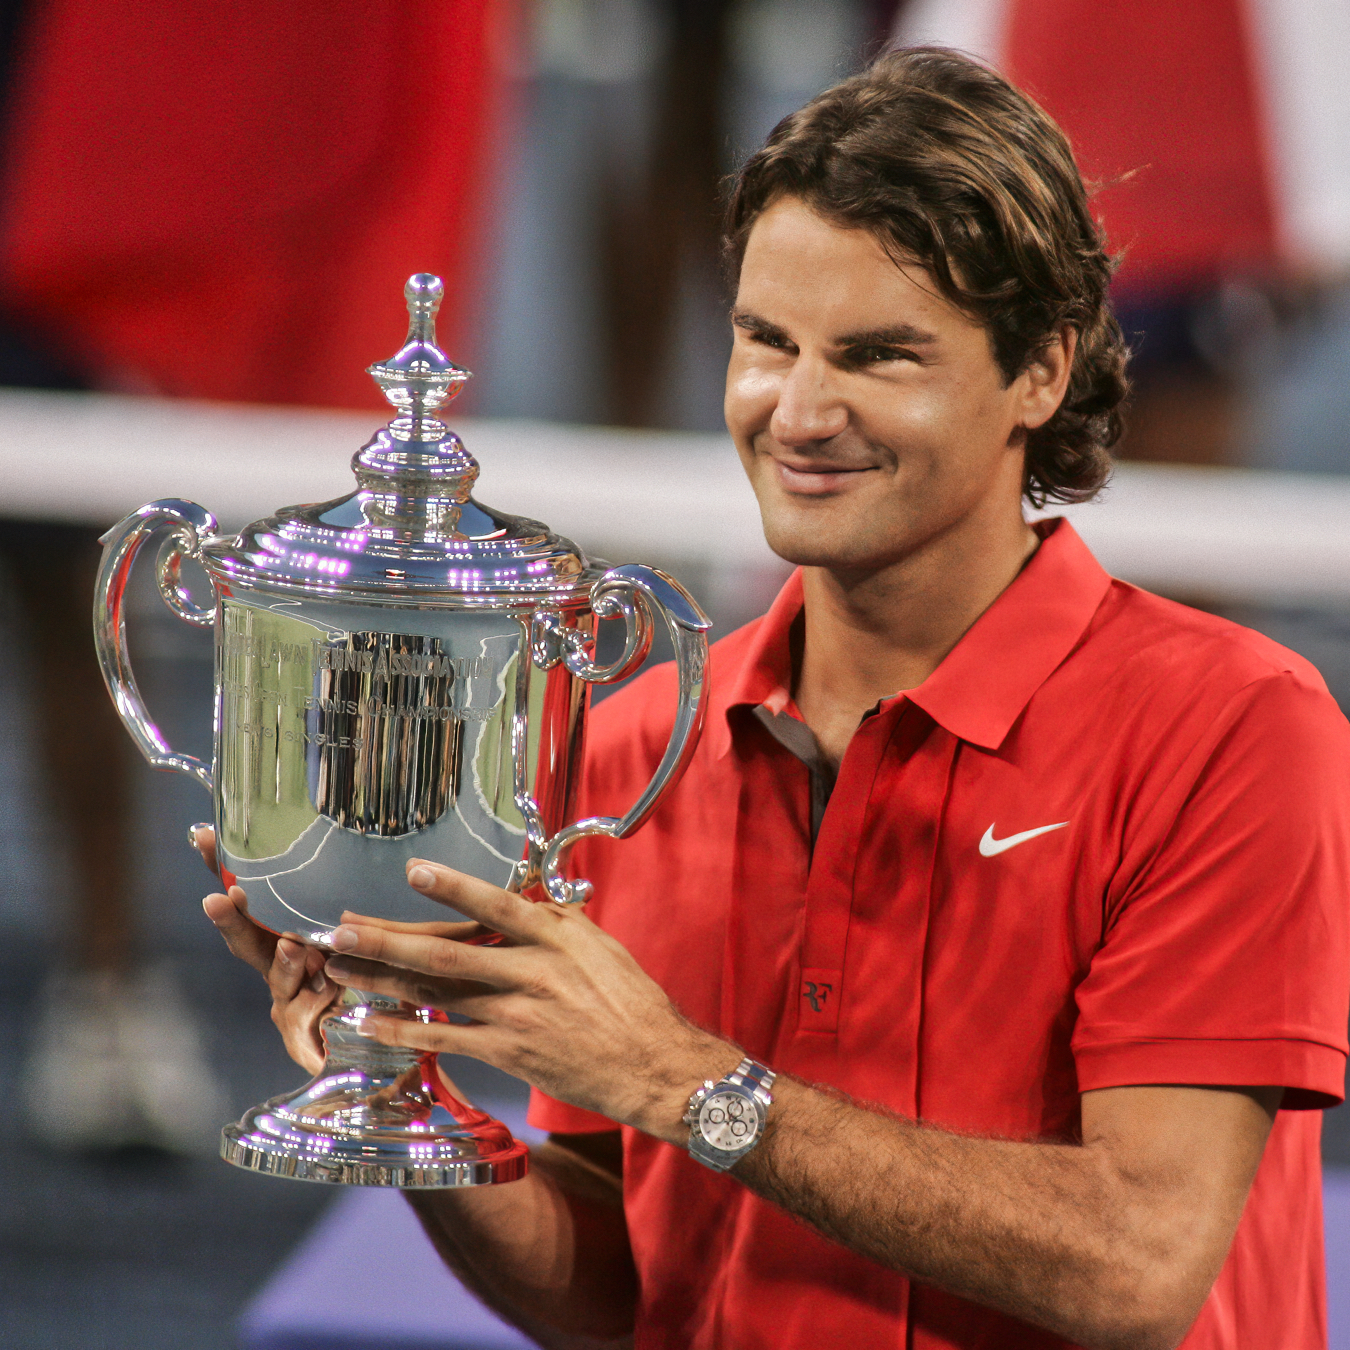 Roger Federer holding Rolex US Open trophy wearing silver Rolex watch